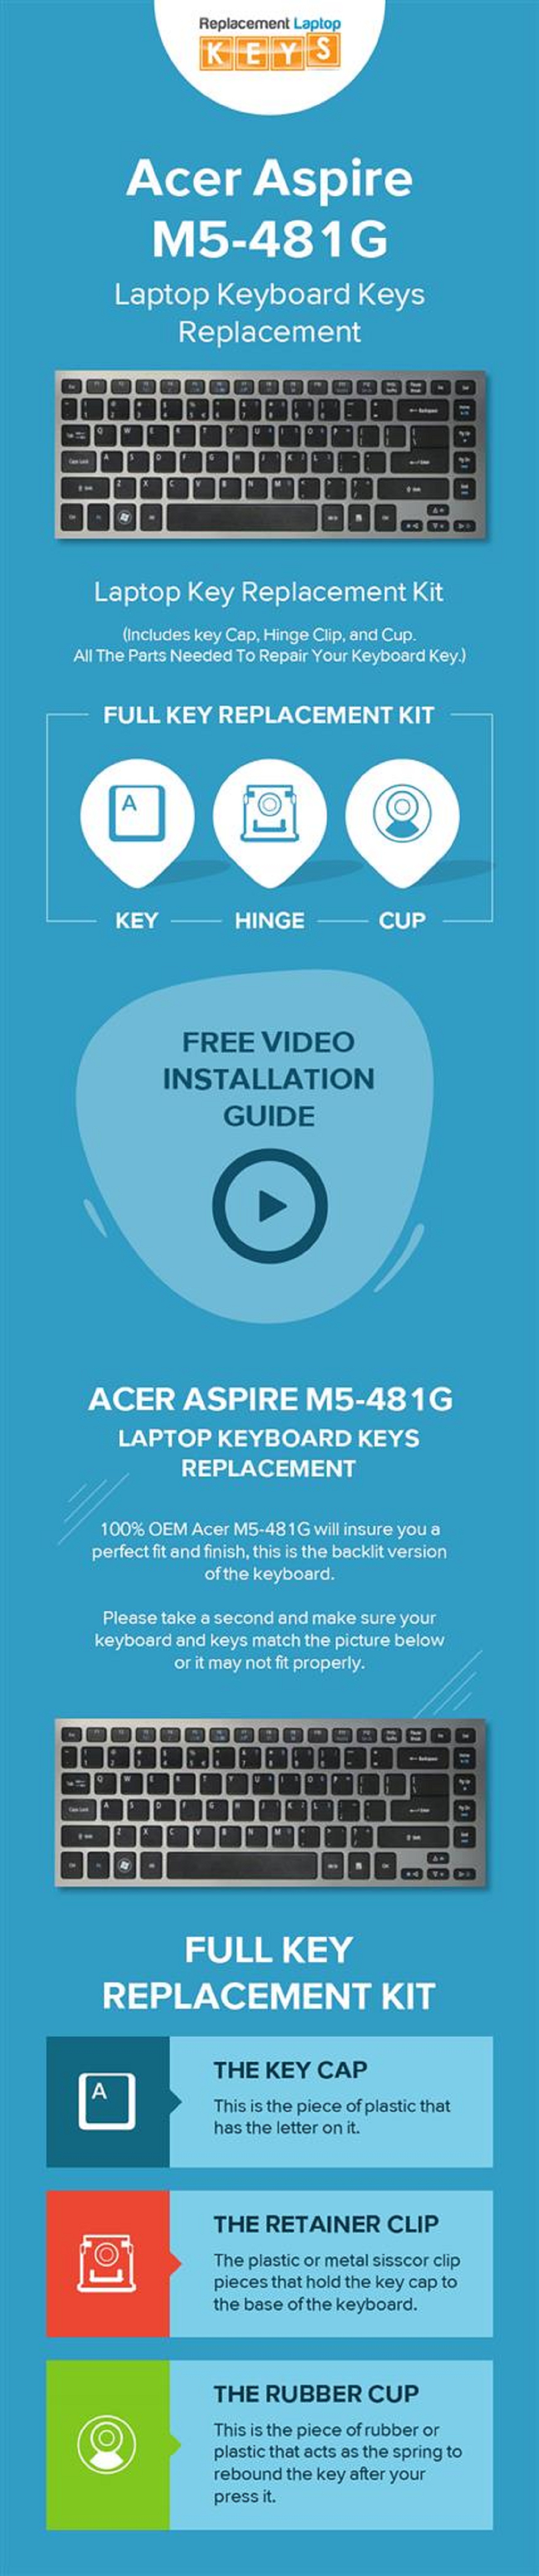 Shop Acer Aspire M5-481G Laptop Keys Online from Replacement Laptop Keys